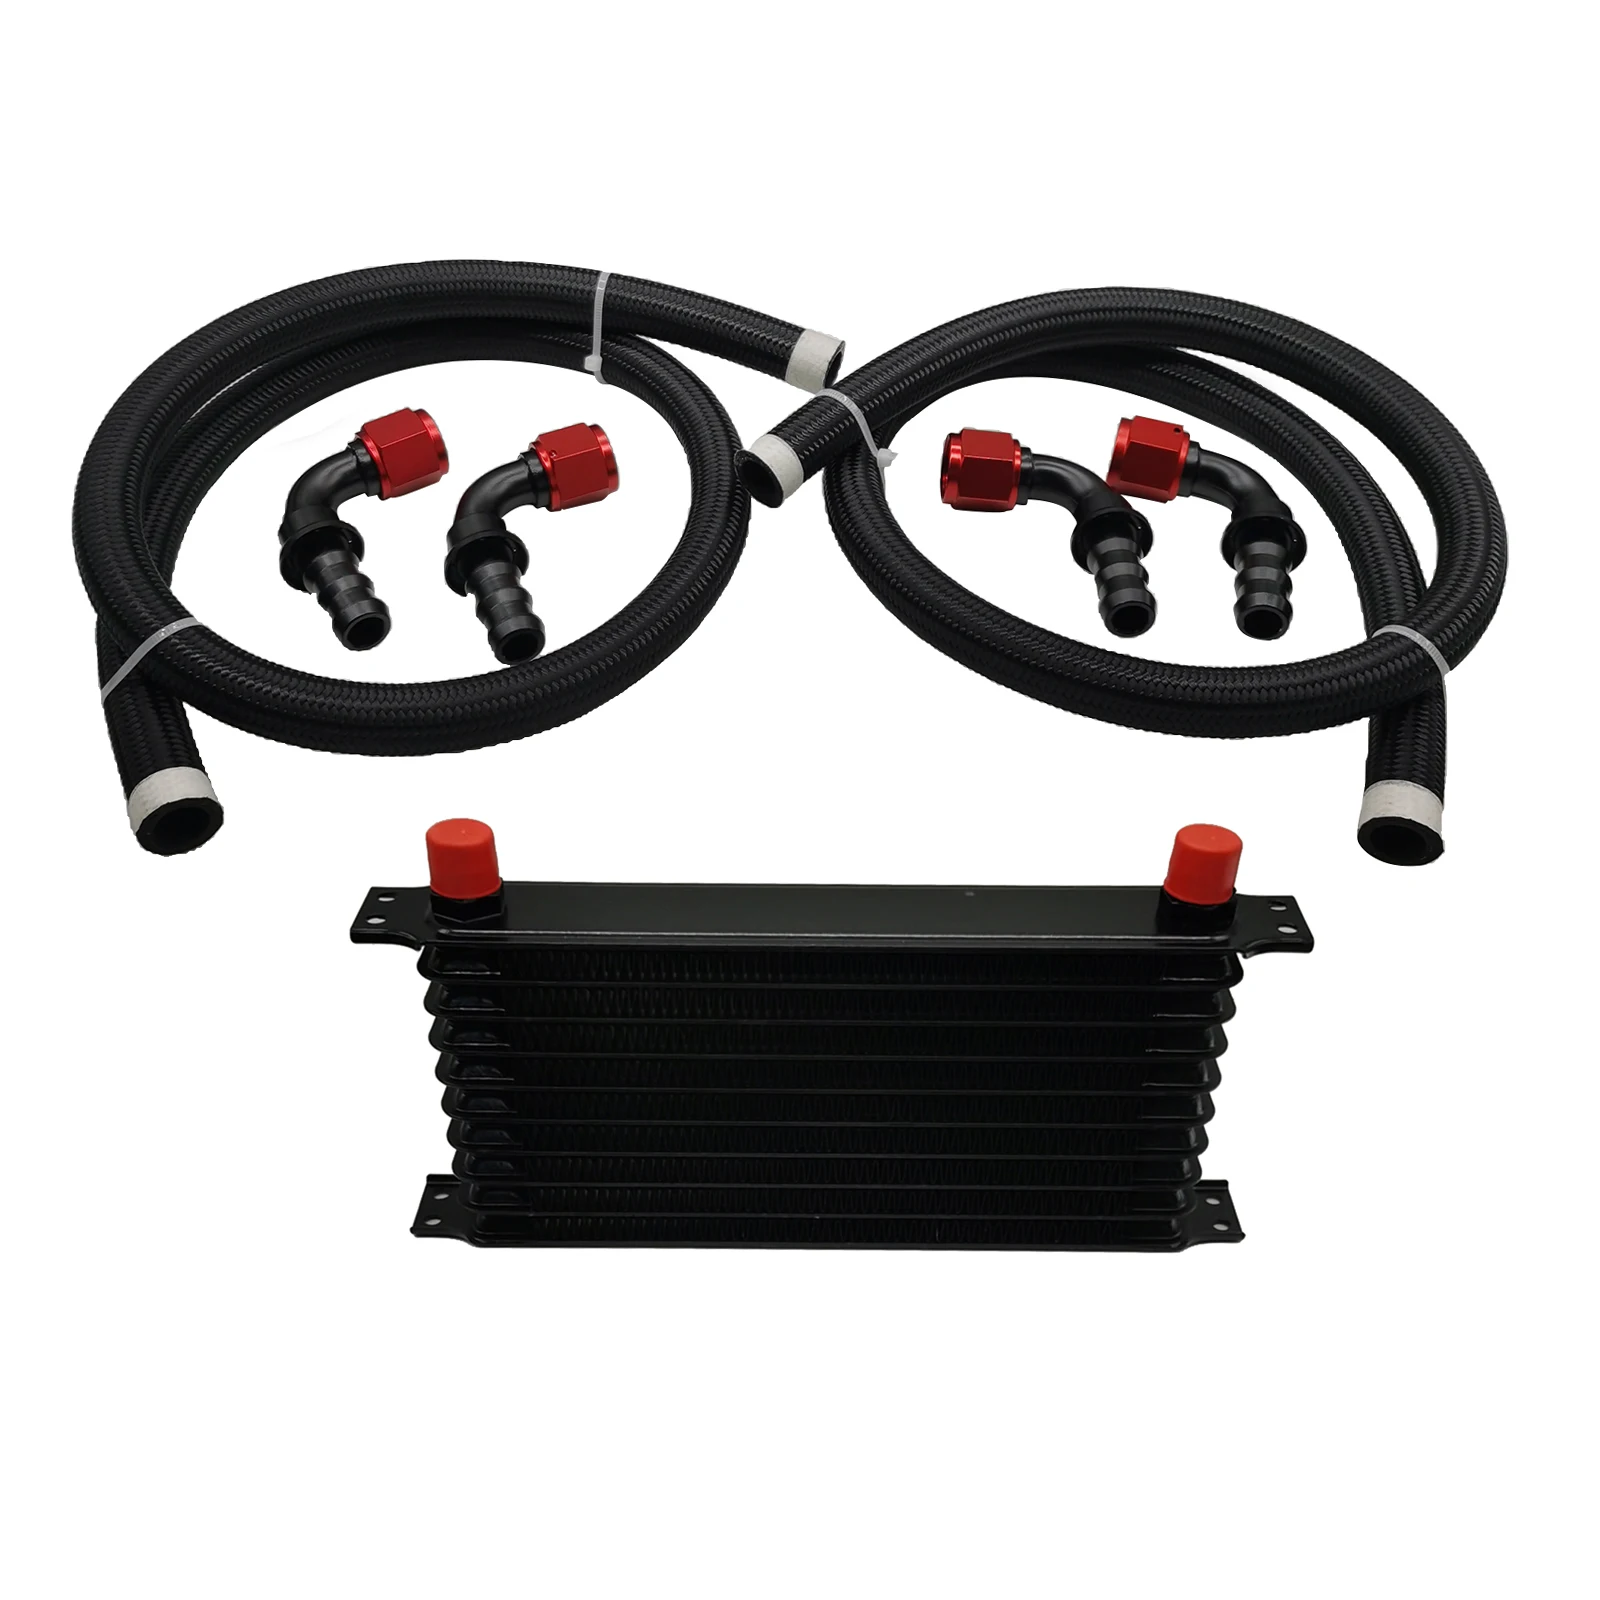 AN10 Oil Cooler Coolers Engine Transmission Radiator Hose Kit Reducing Coolant Temperature Black AUTO Part